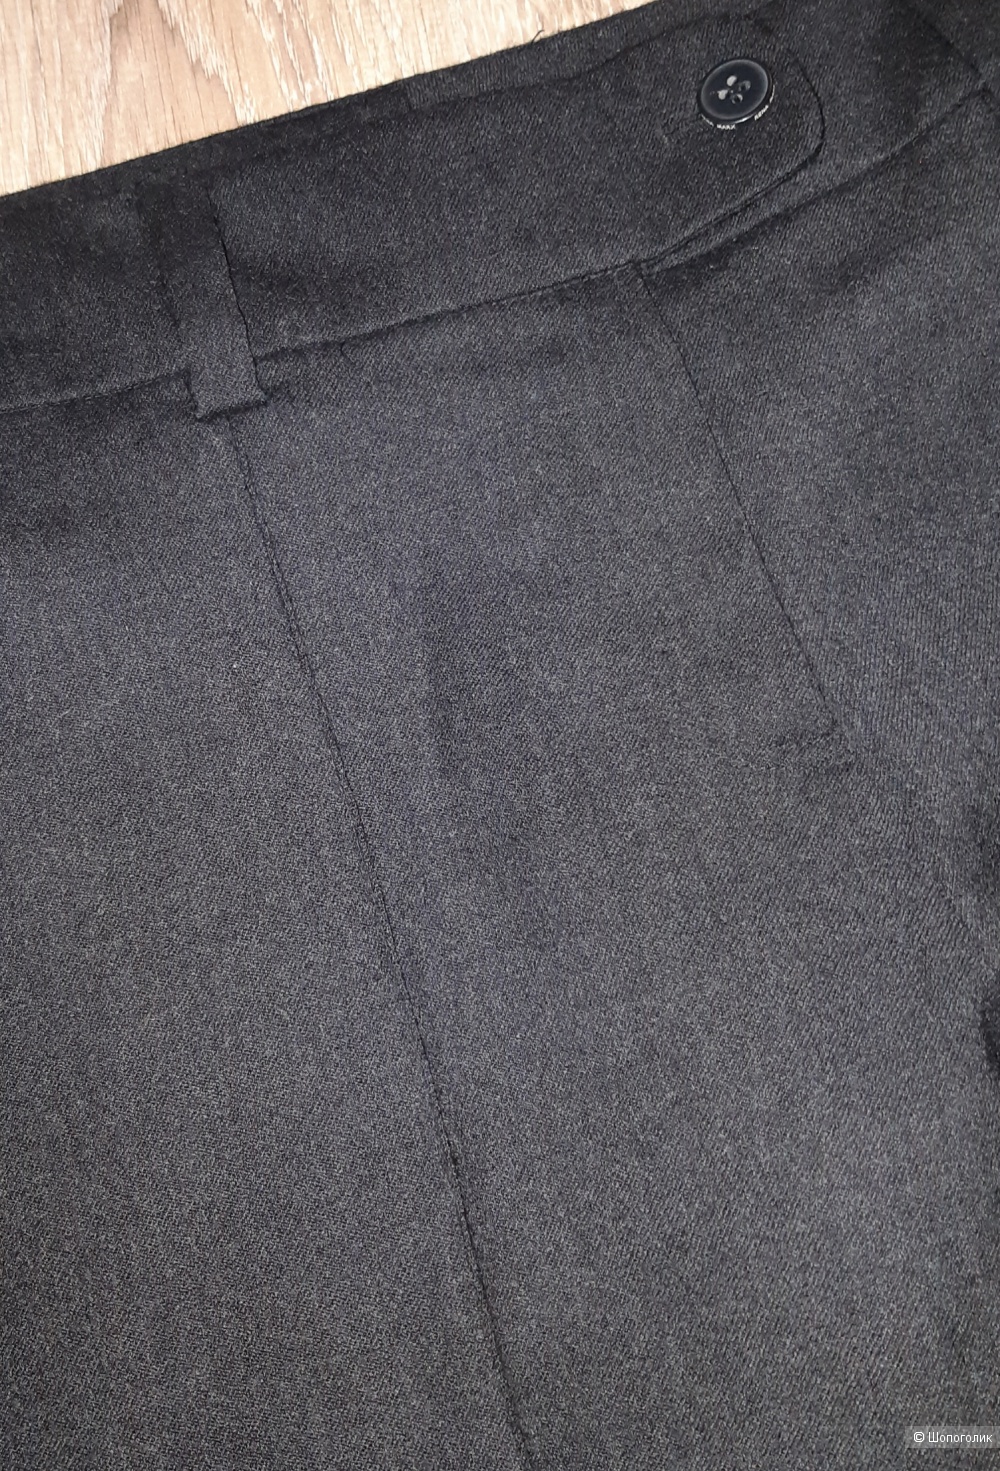 Шерстяные брюки rena marx, размер 46